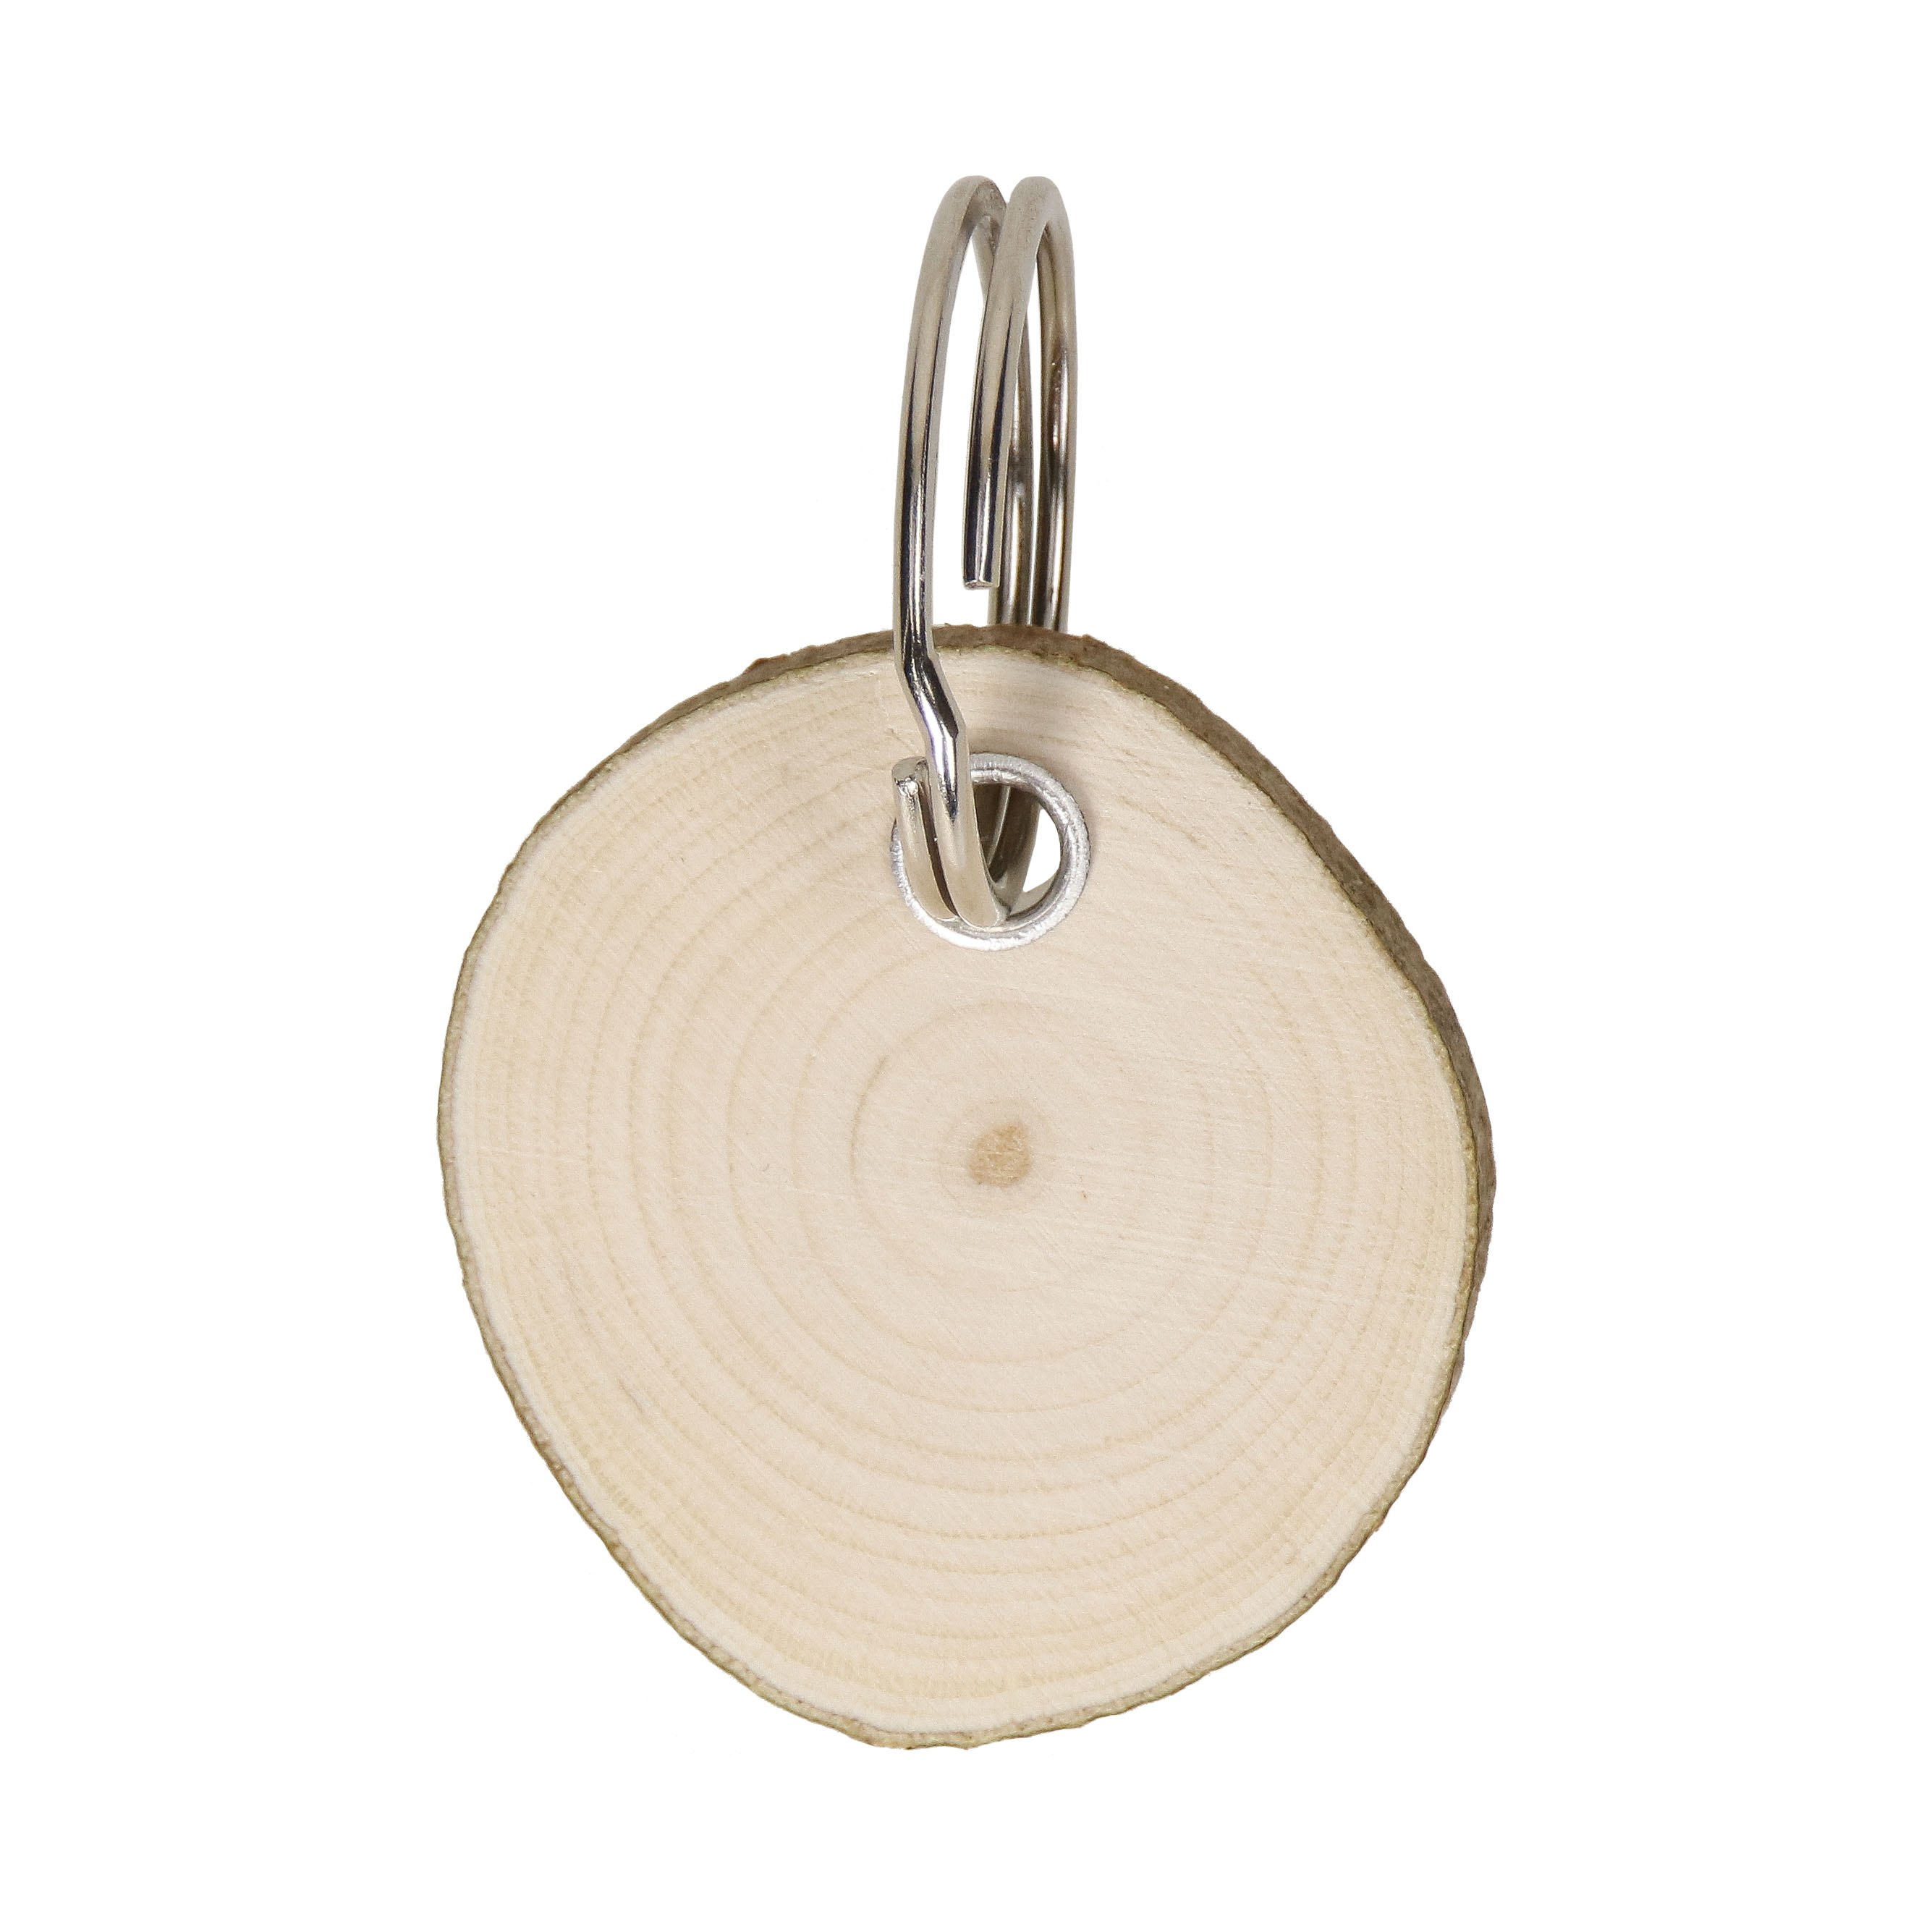 Wooden key ring 